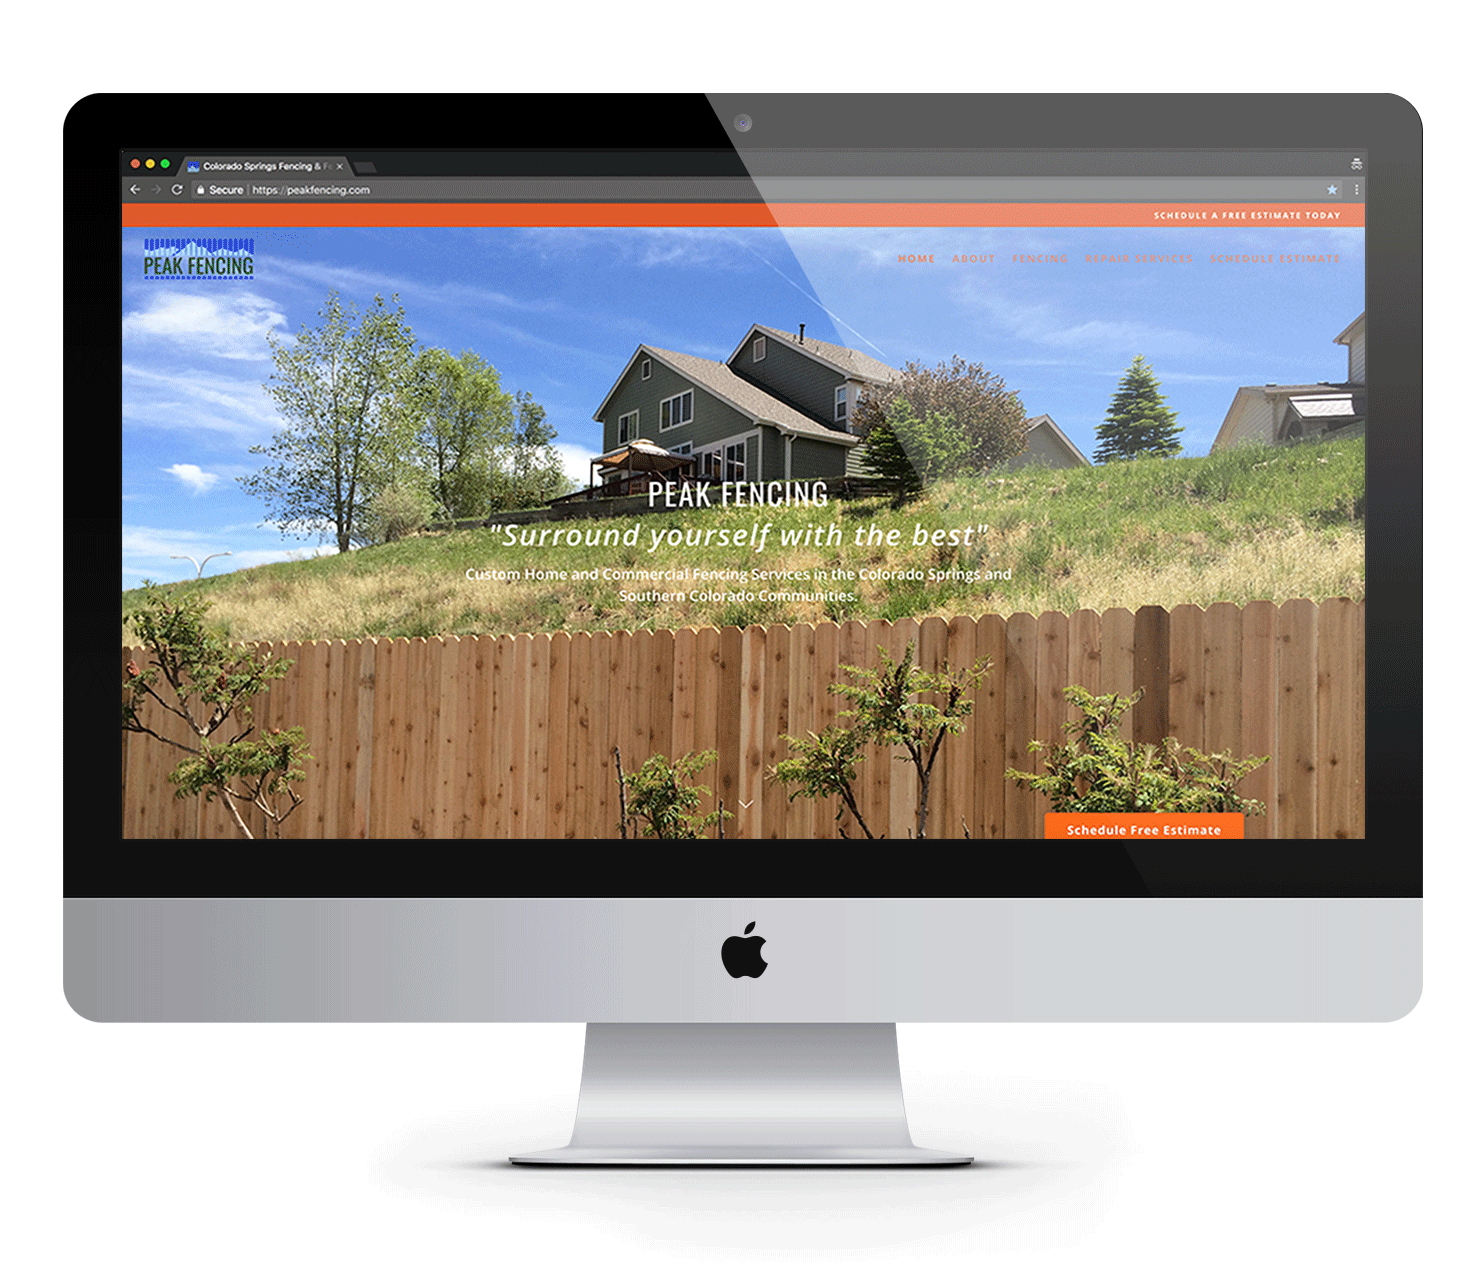 Peak Fencing new website design shown on an imac